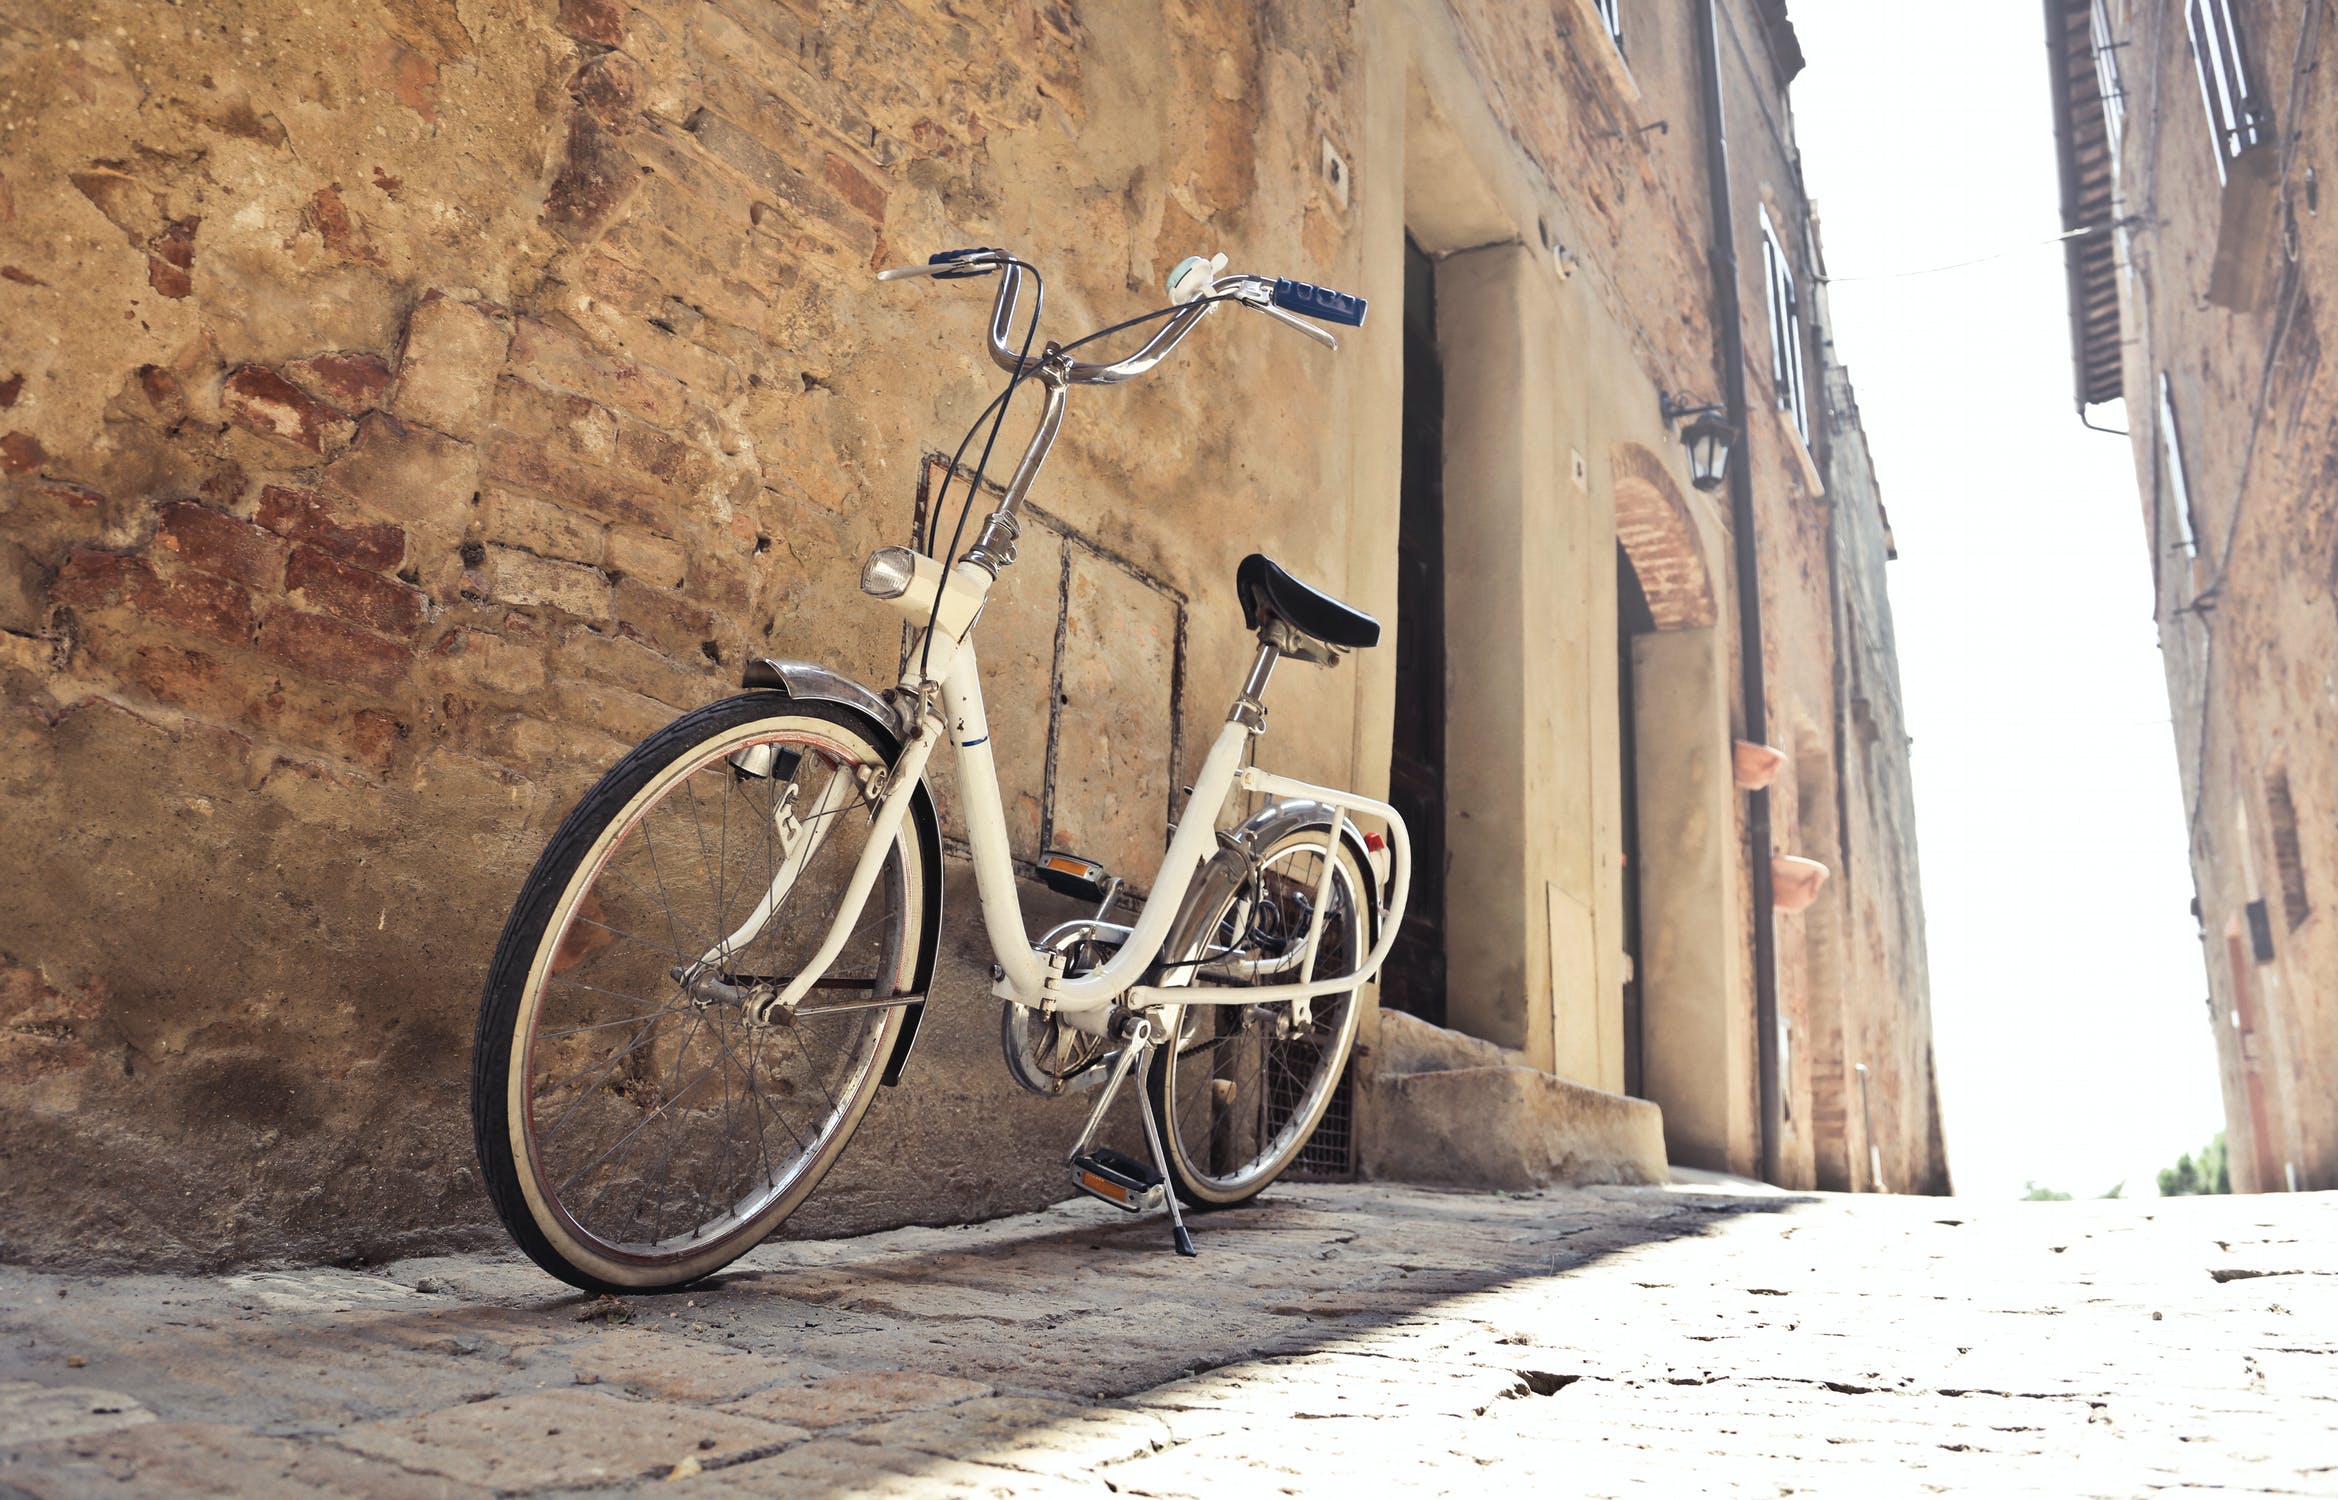 Cykel parkeret op ad mur